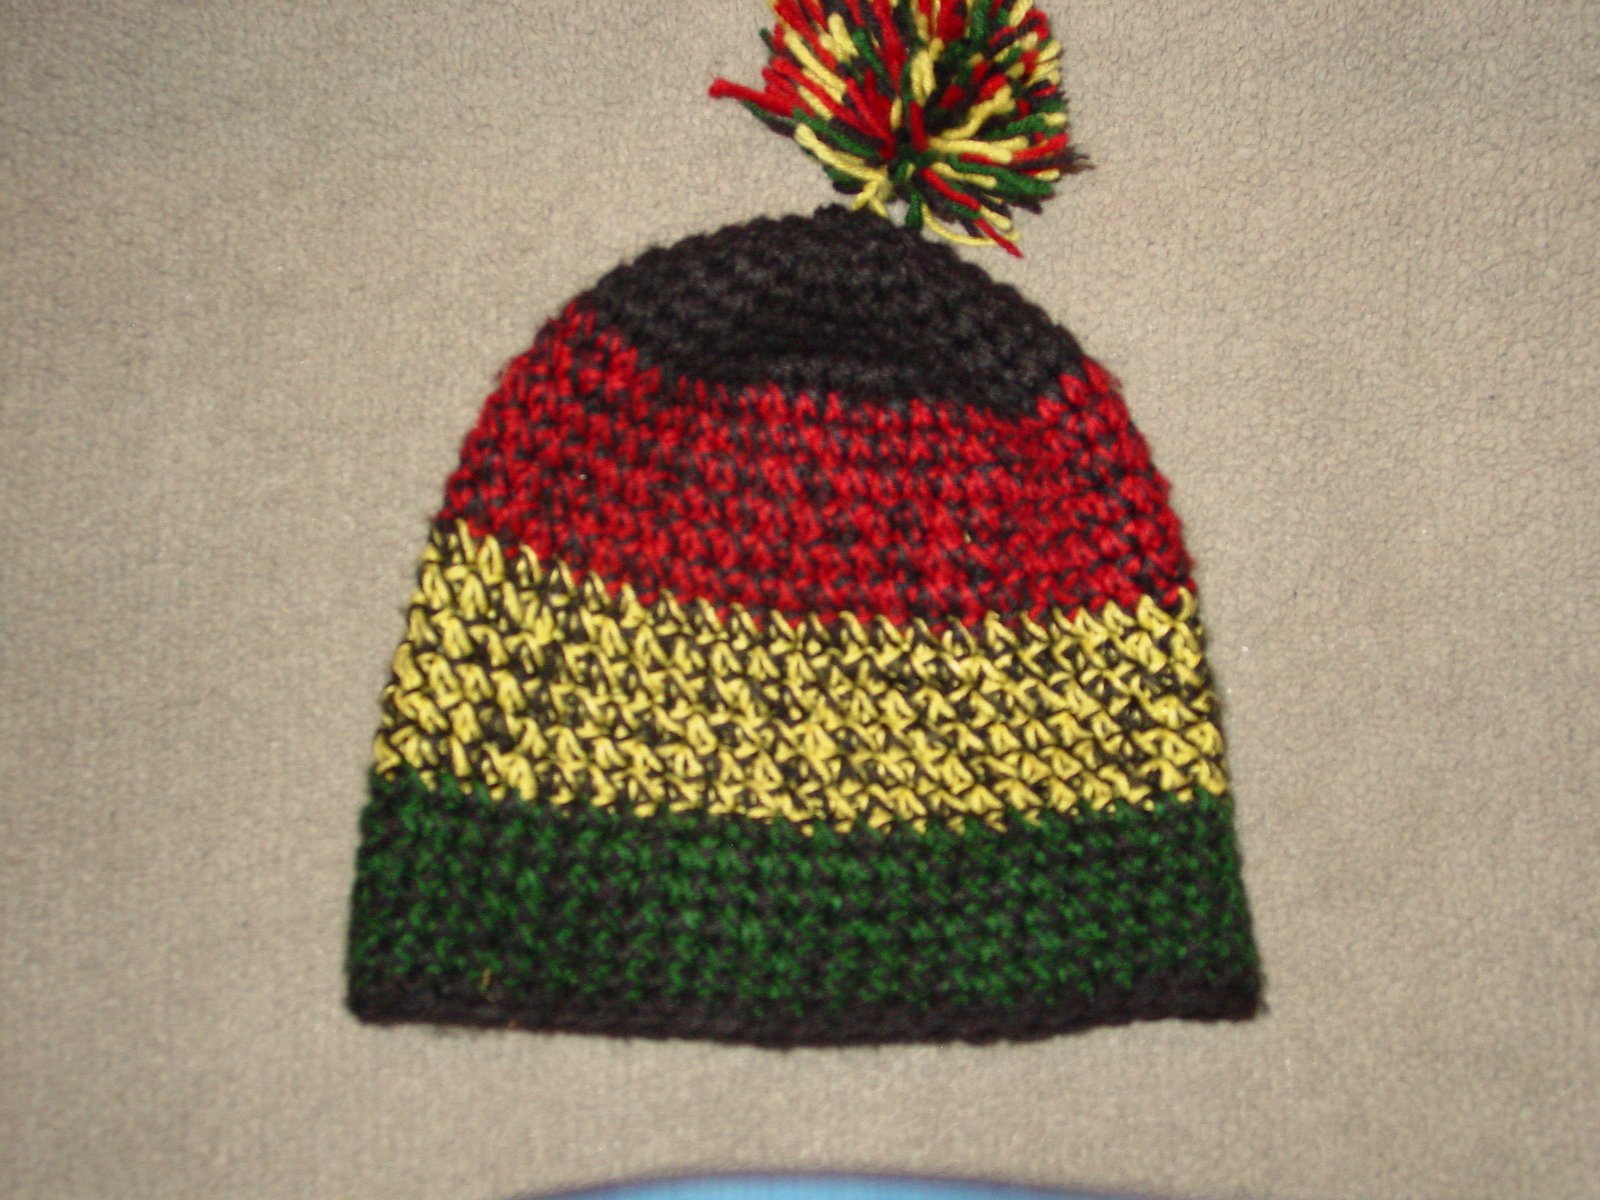 Rastafari hat